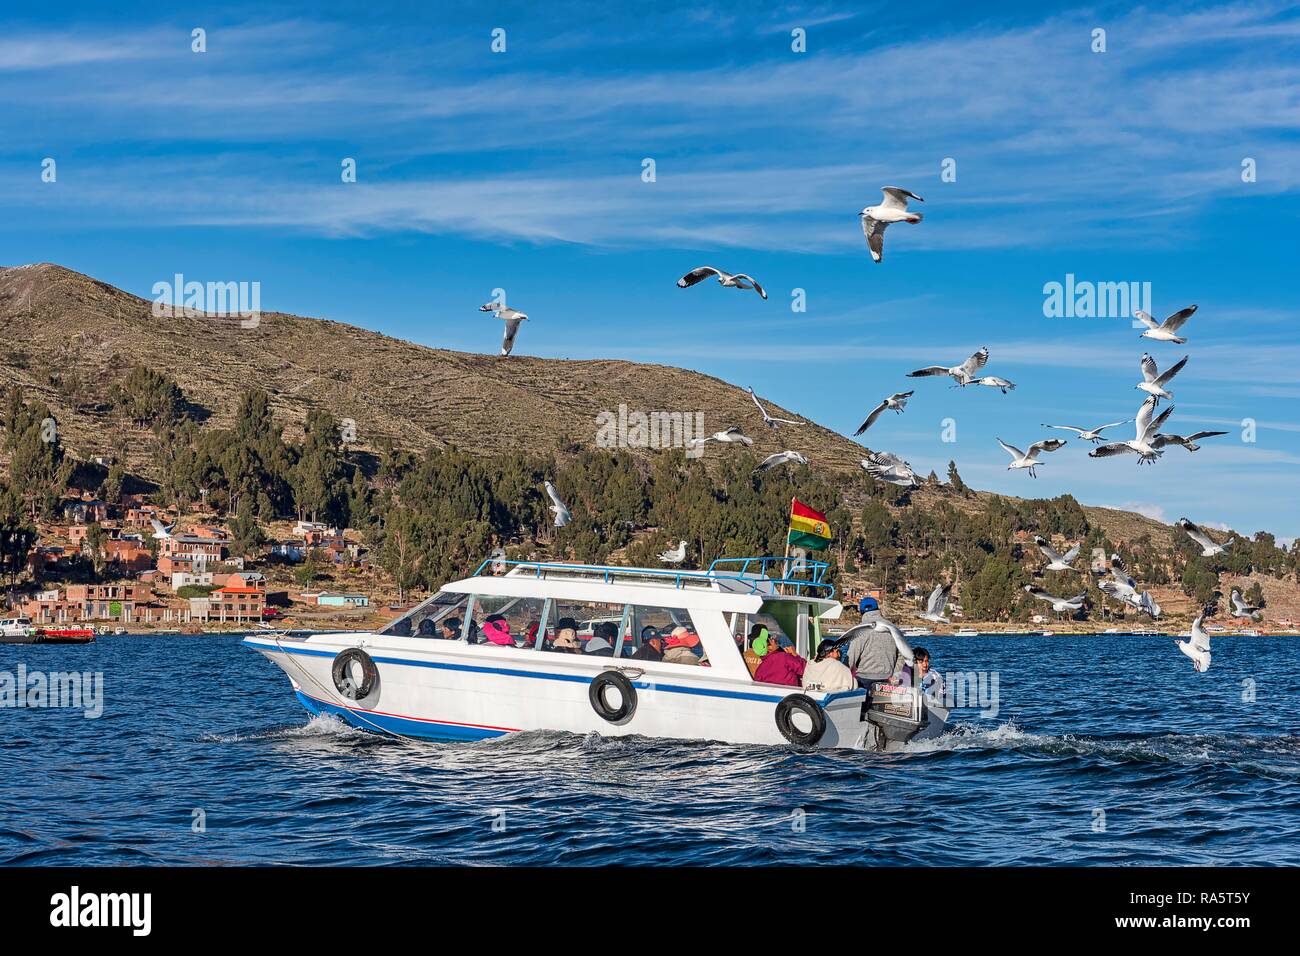 Boat with seagulls, Lake Titicaca, Bolivia Stock Photo